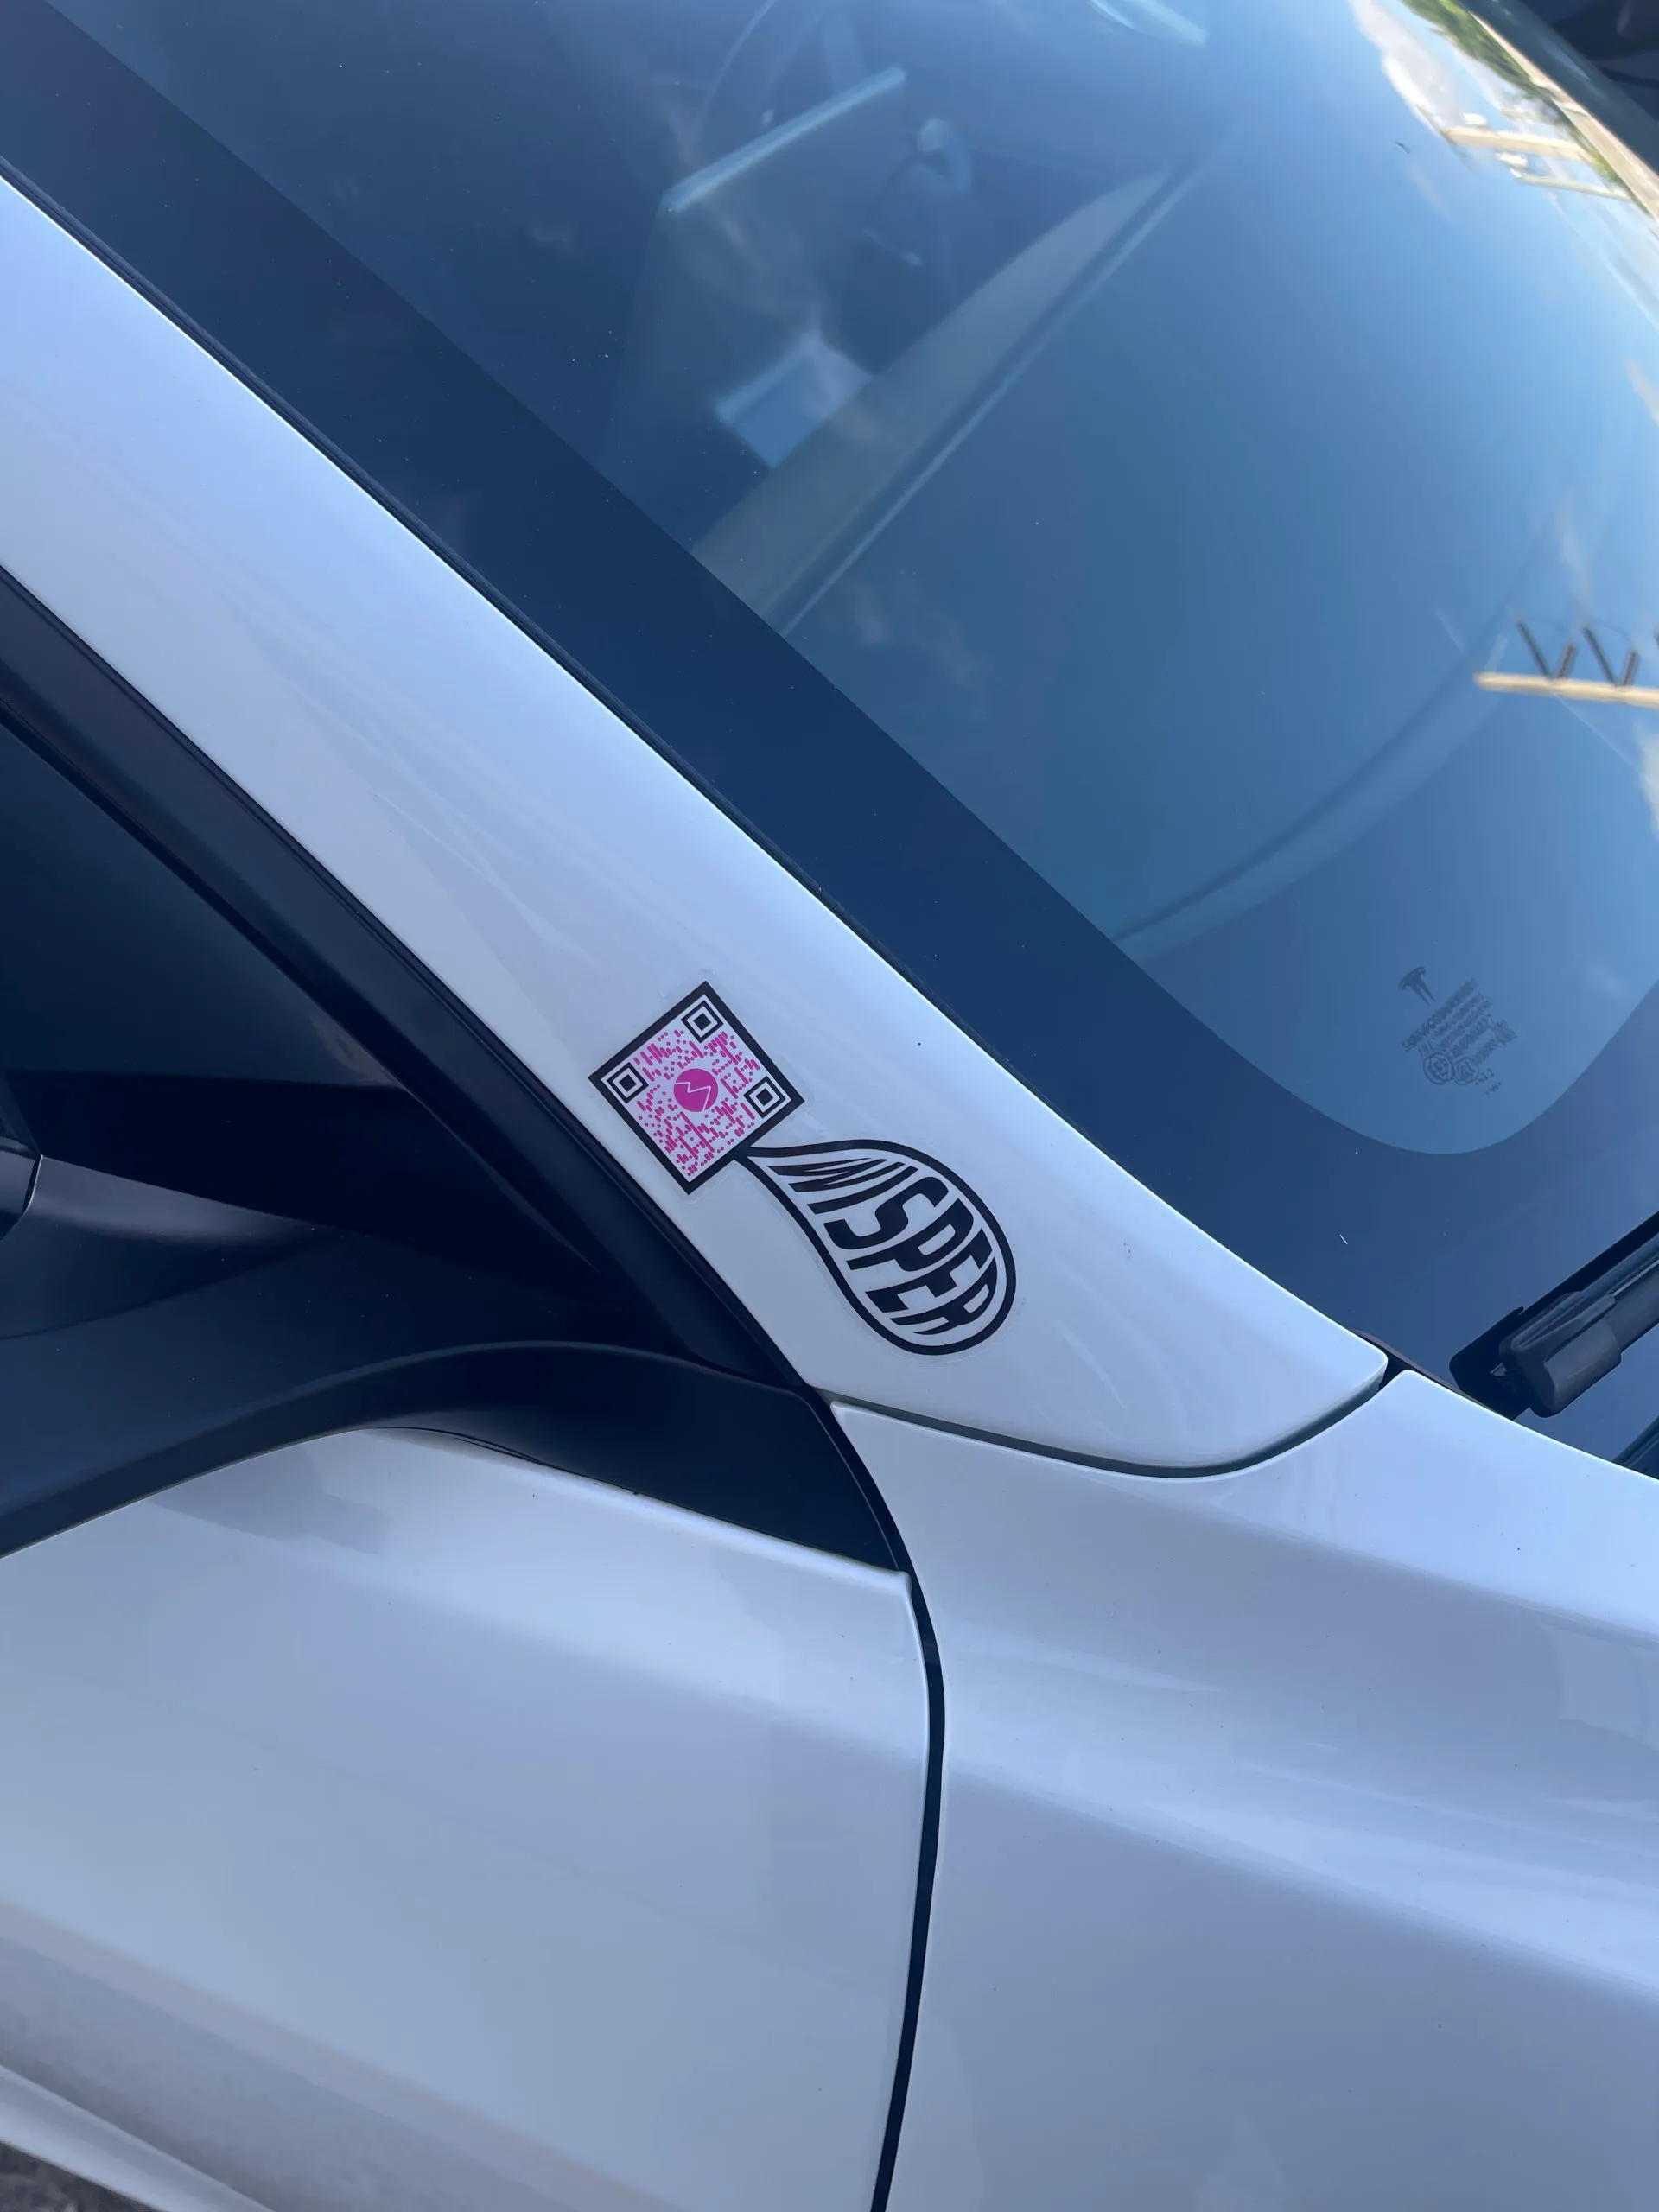 Wisper sticker on a white car